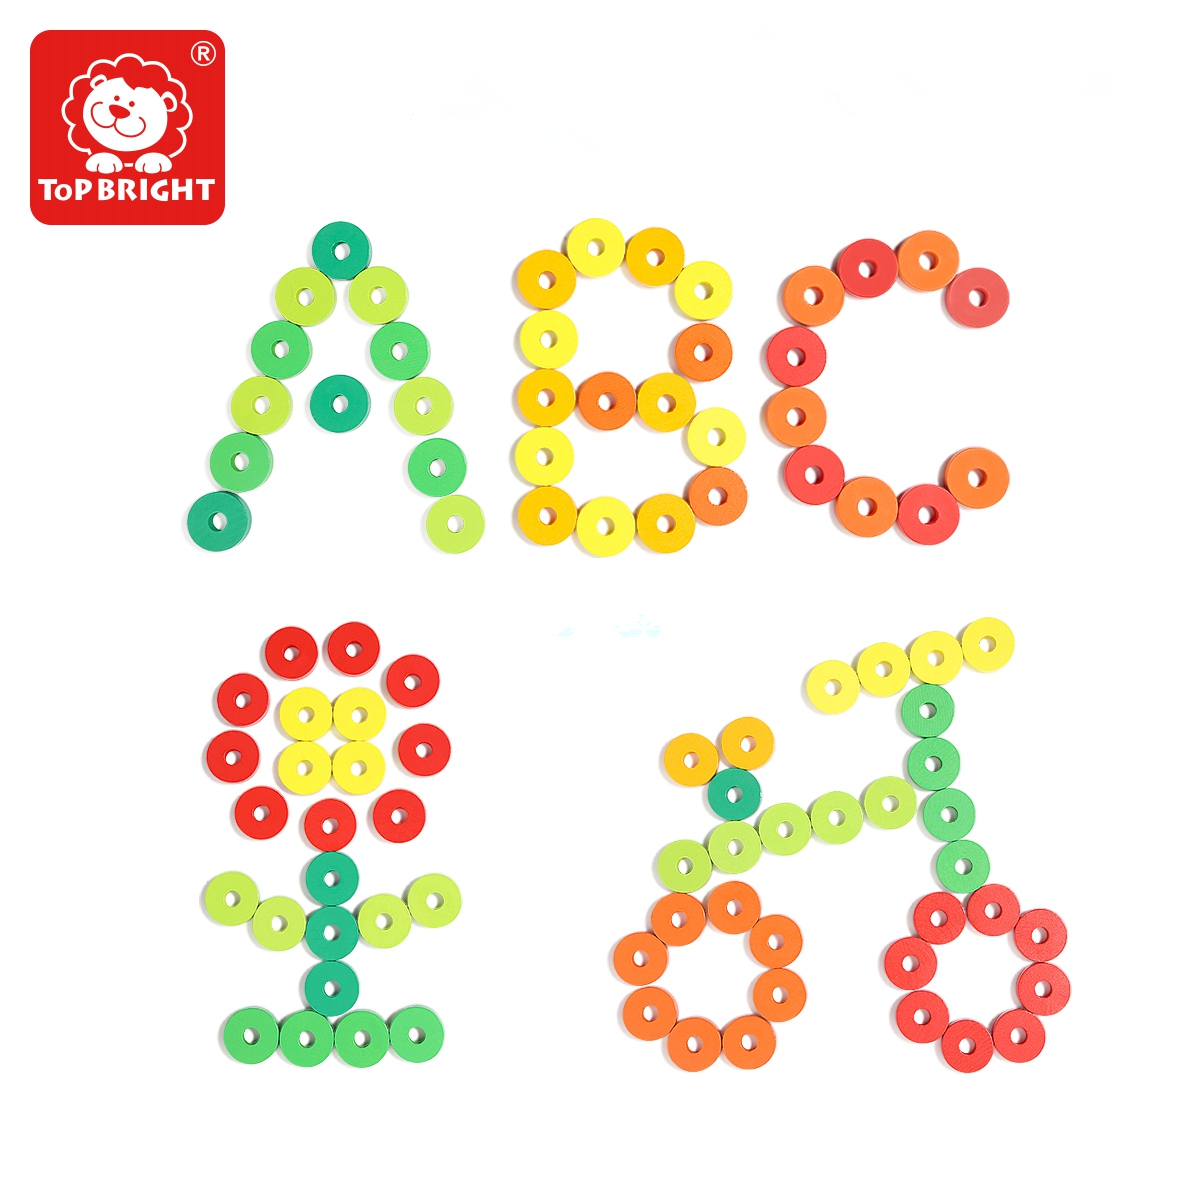 TopBright-6540-Blocks-Montessori-Classic-Math-Rainbow-Donuts-Box-Educational-Toys-for-Kids-1379243-2